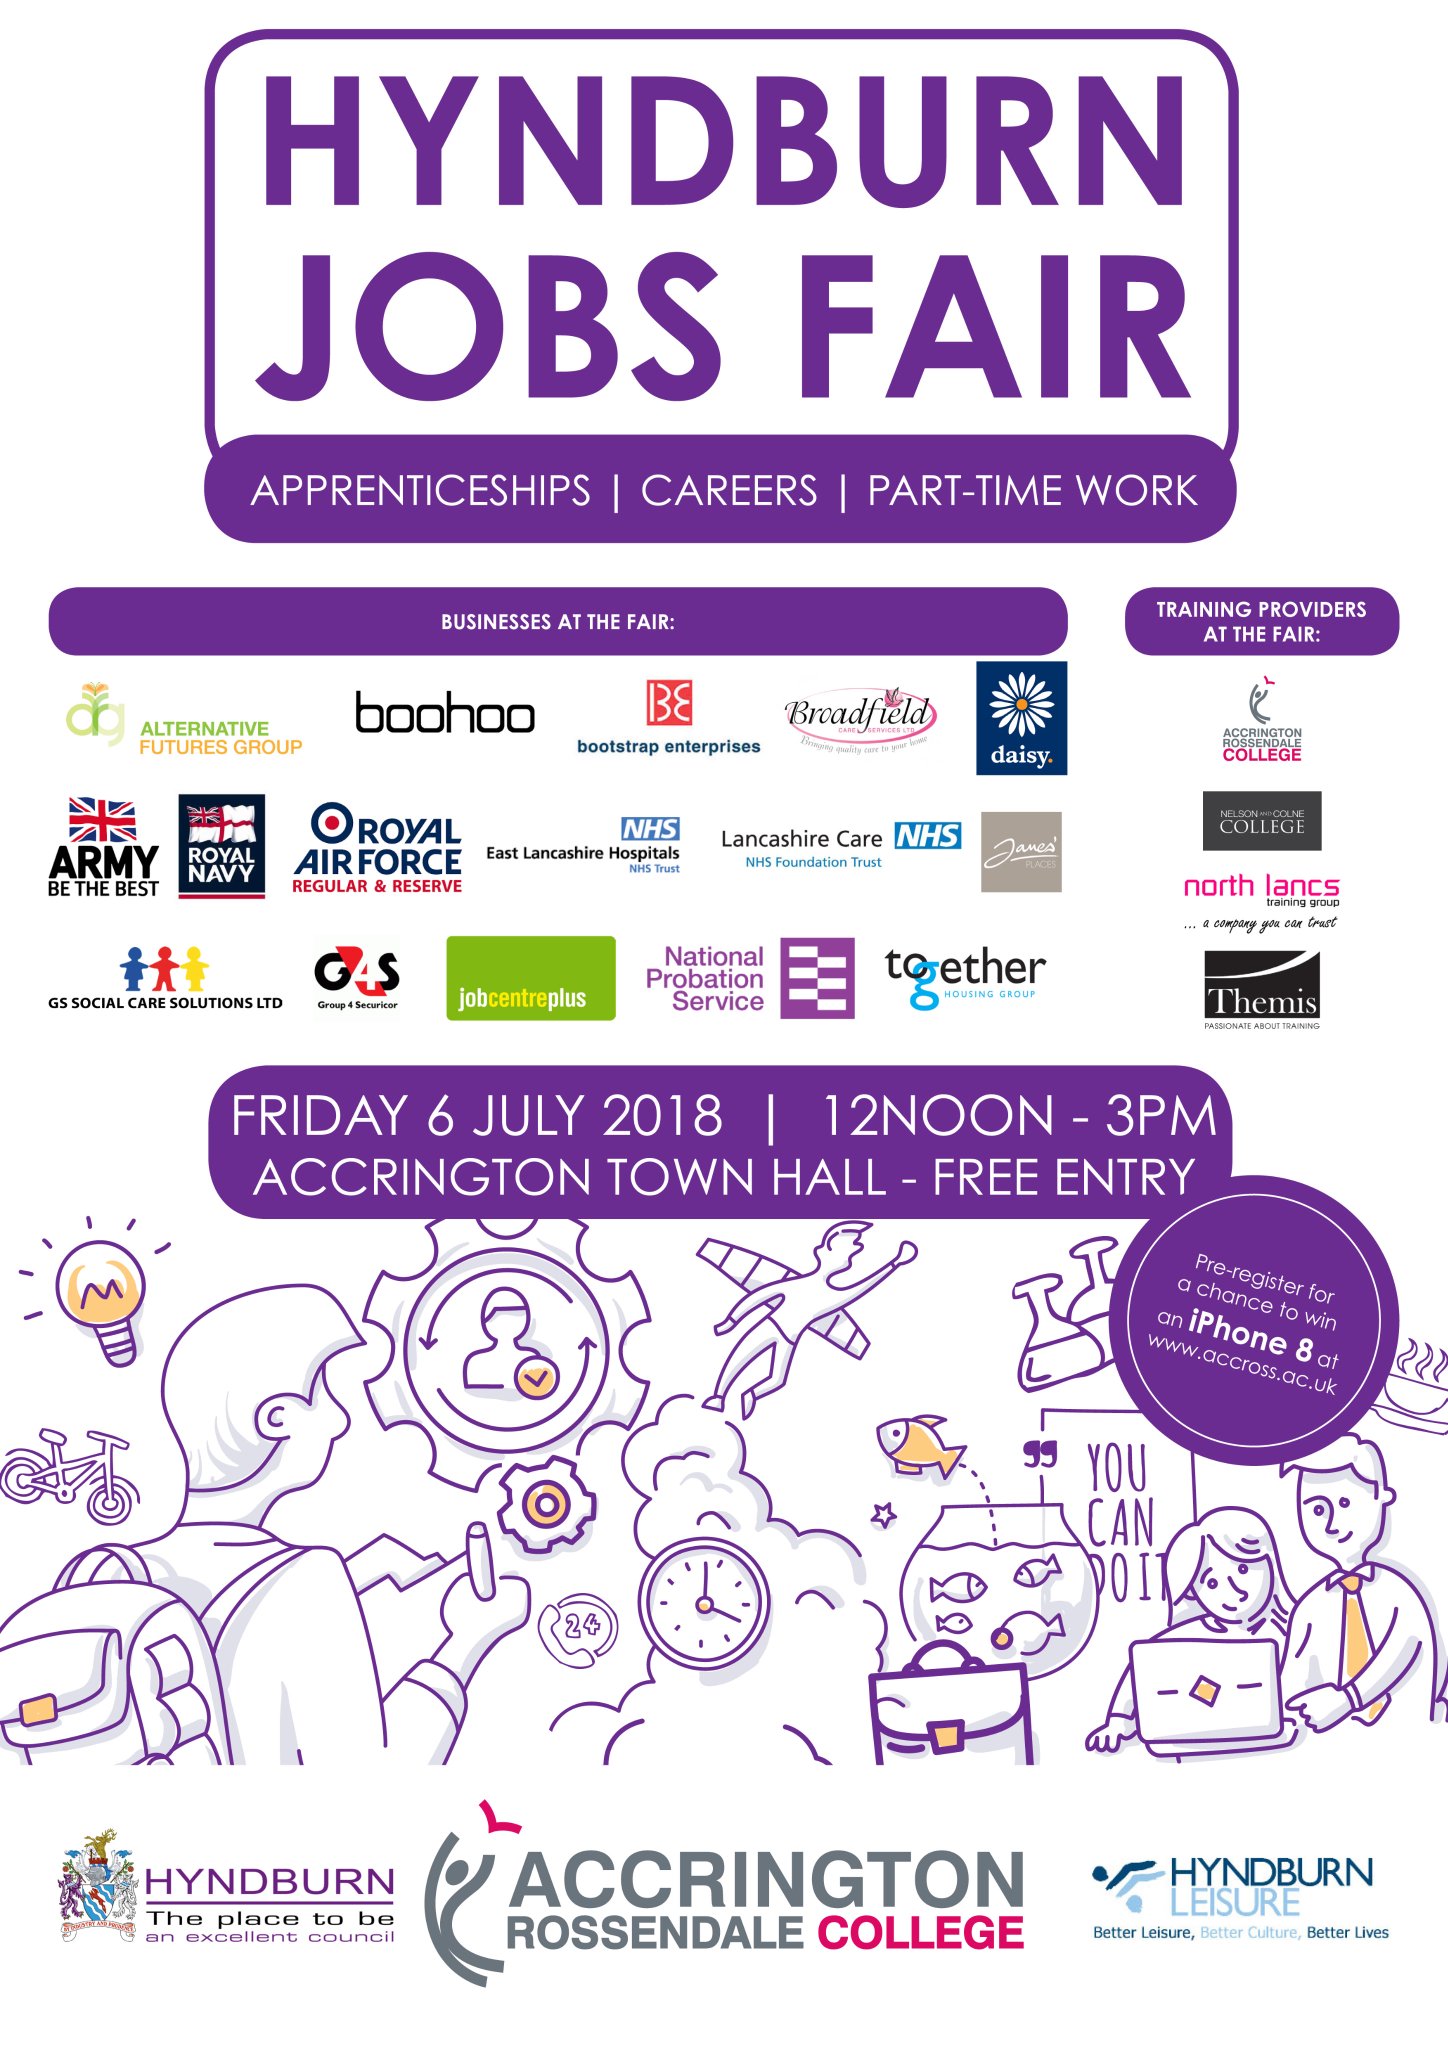 Hyndburn Jobs and Apprenticeship Fair Coming to Accrington